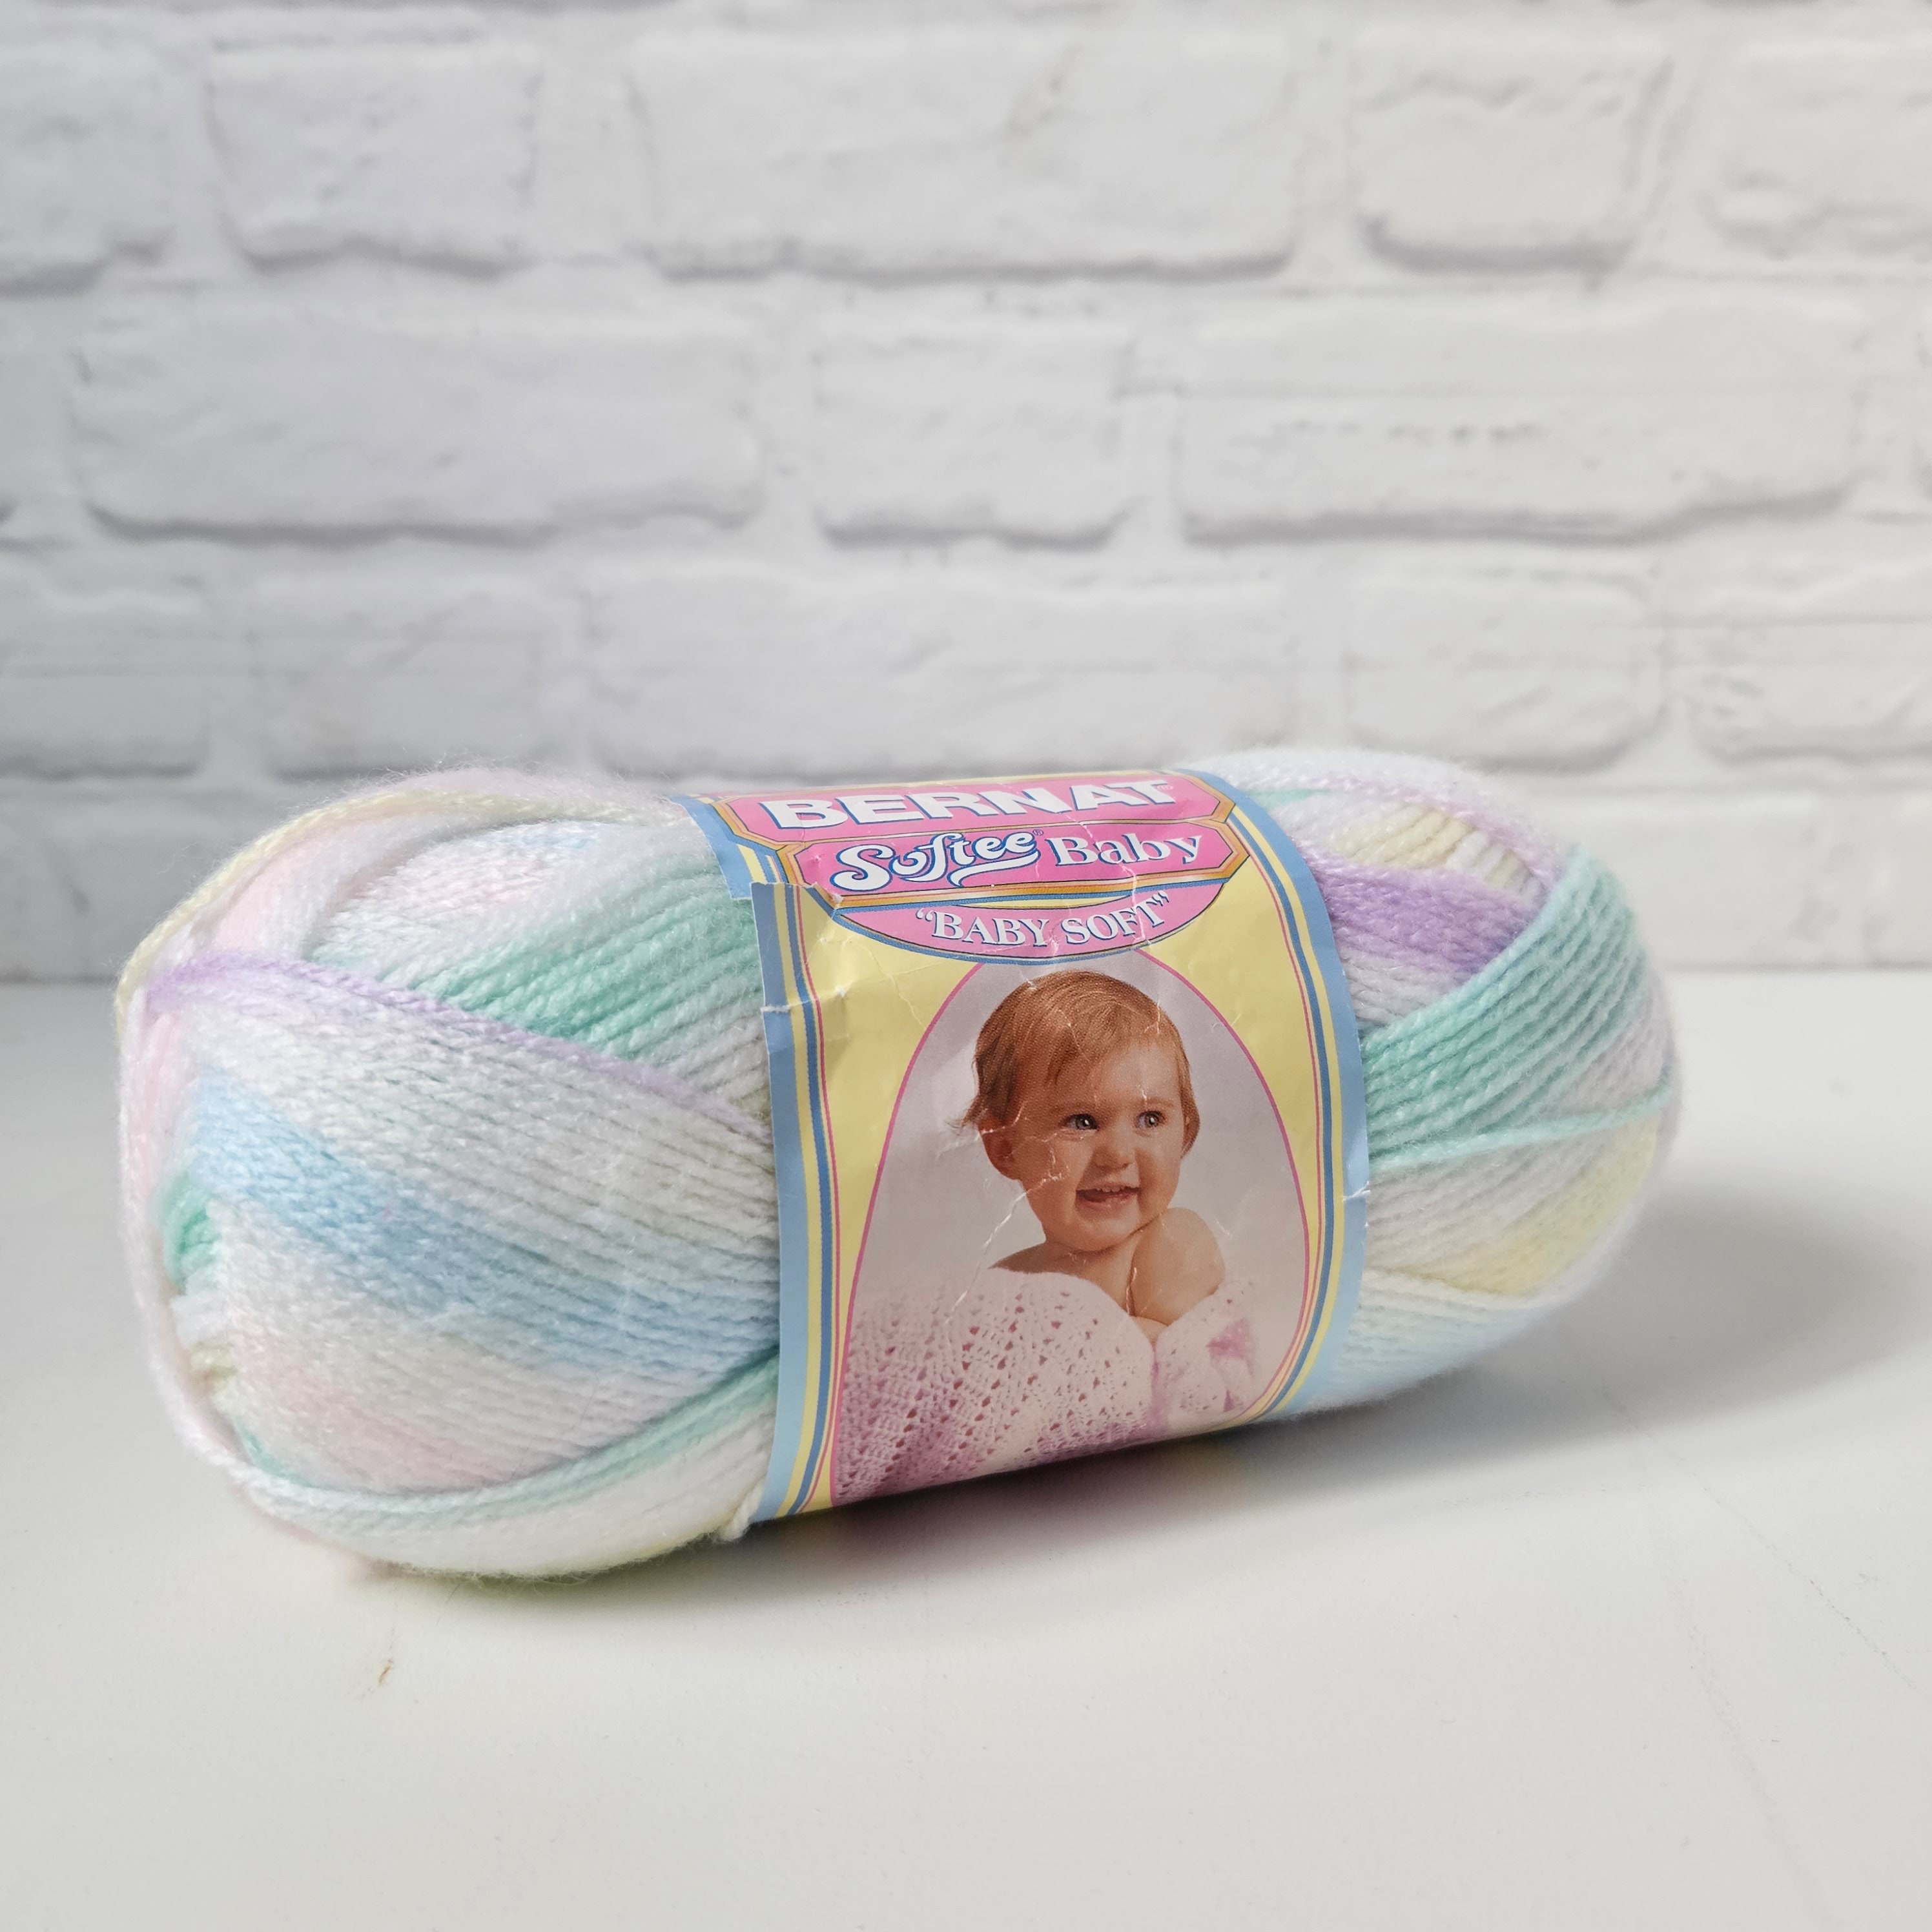 Bernat Softee Baby Stripes Pebbles 250g Knitting & Crochet Yarn